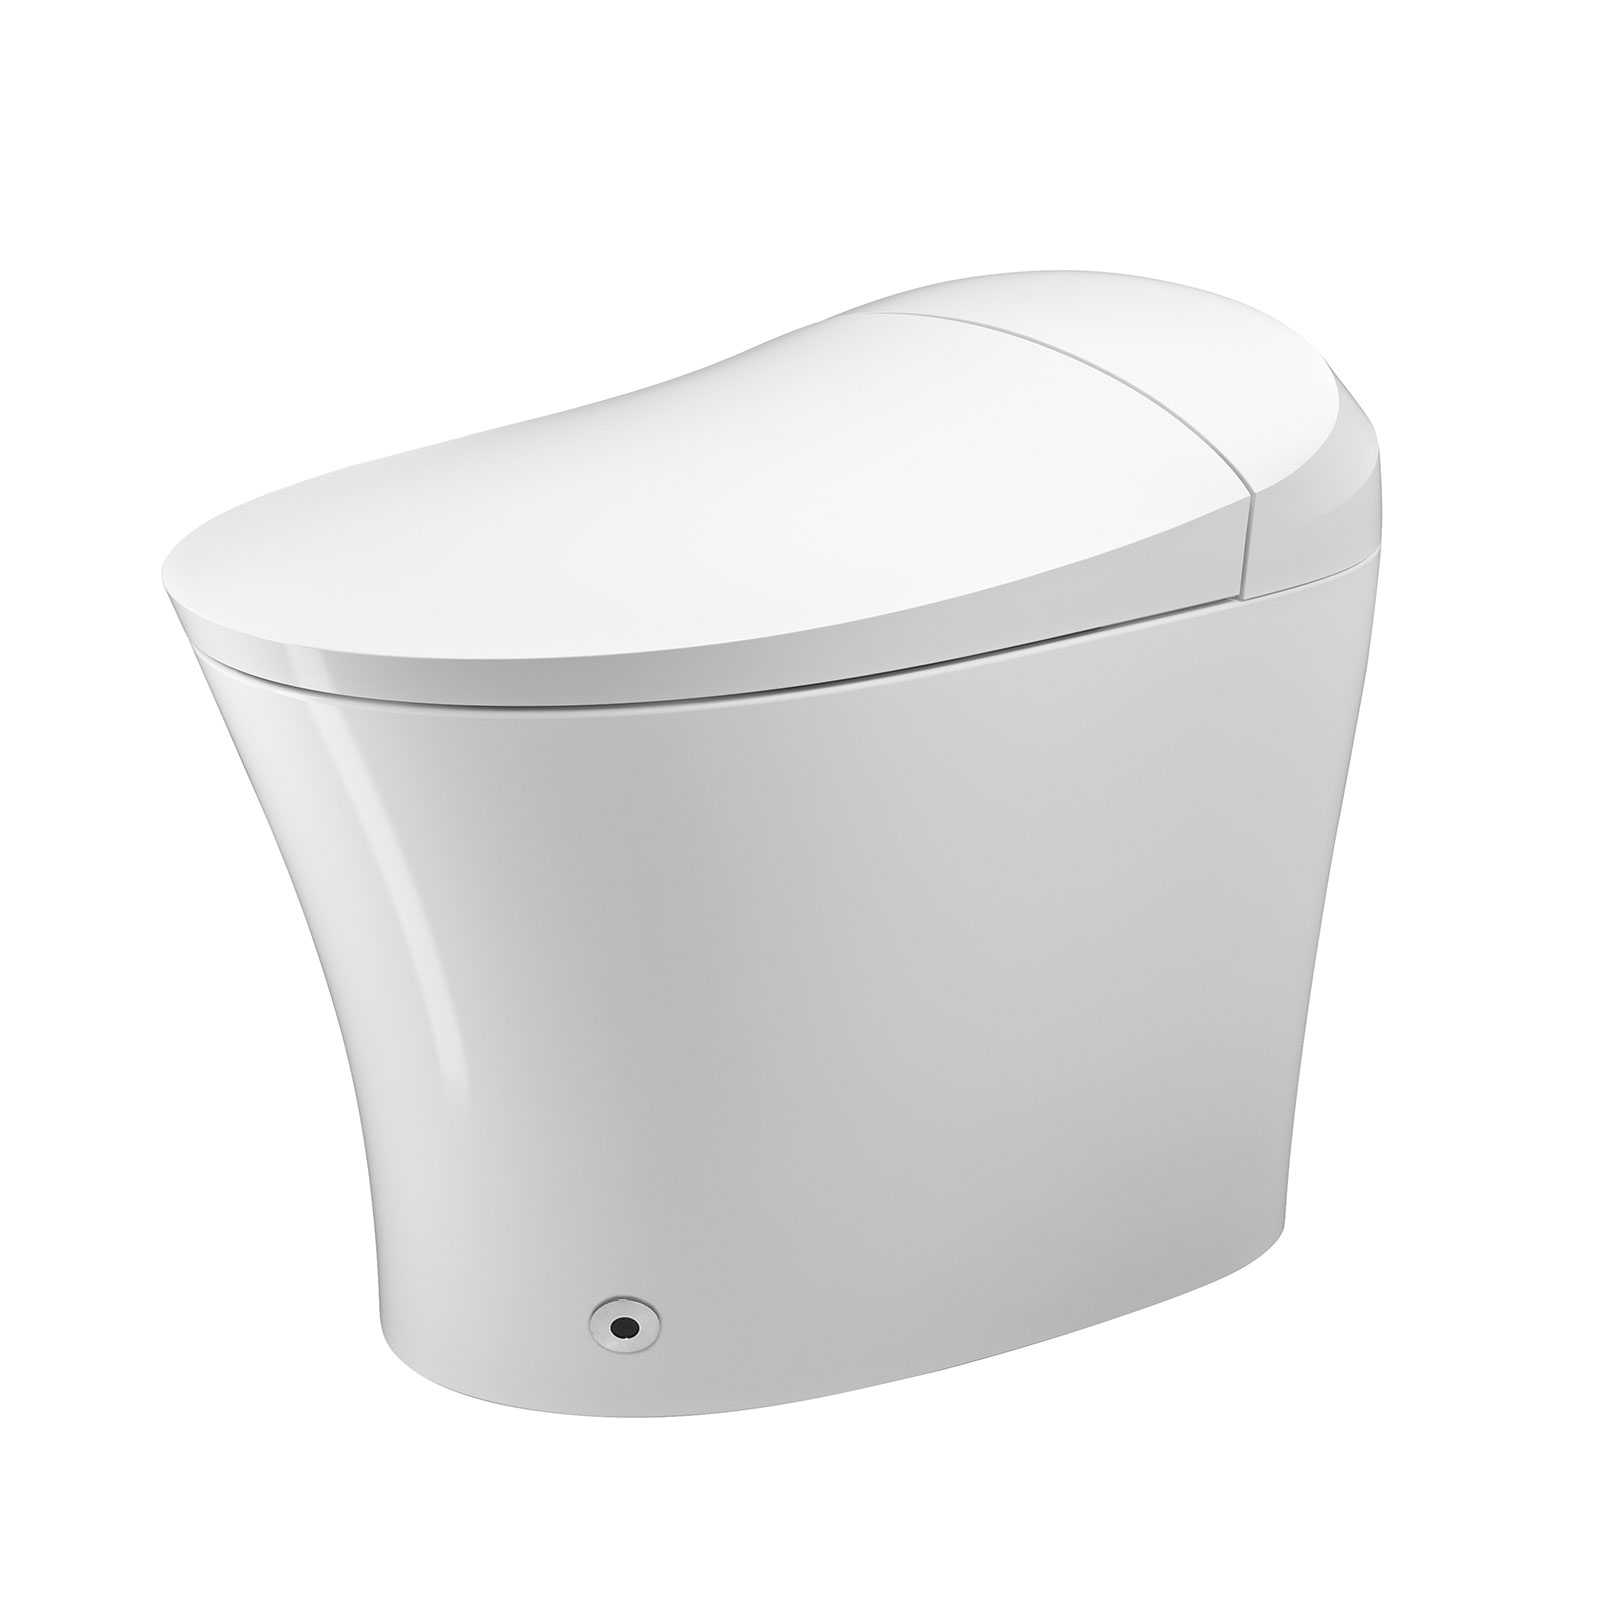 https://www.conceptbaths.com/images/detailed/17/smart-toilet-bidet-832DF-2_-_Copy.jpg